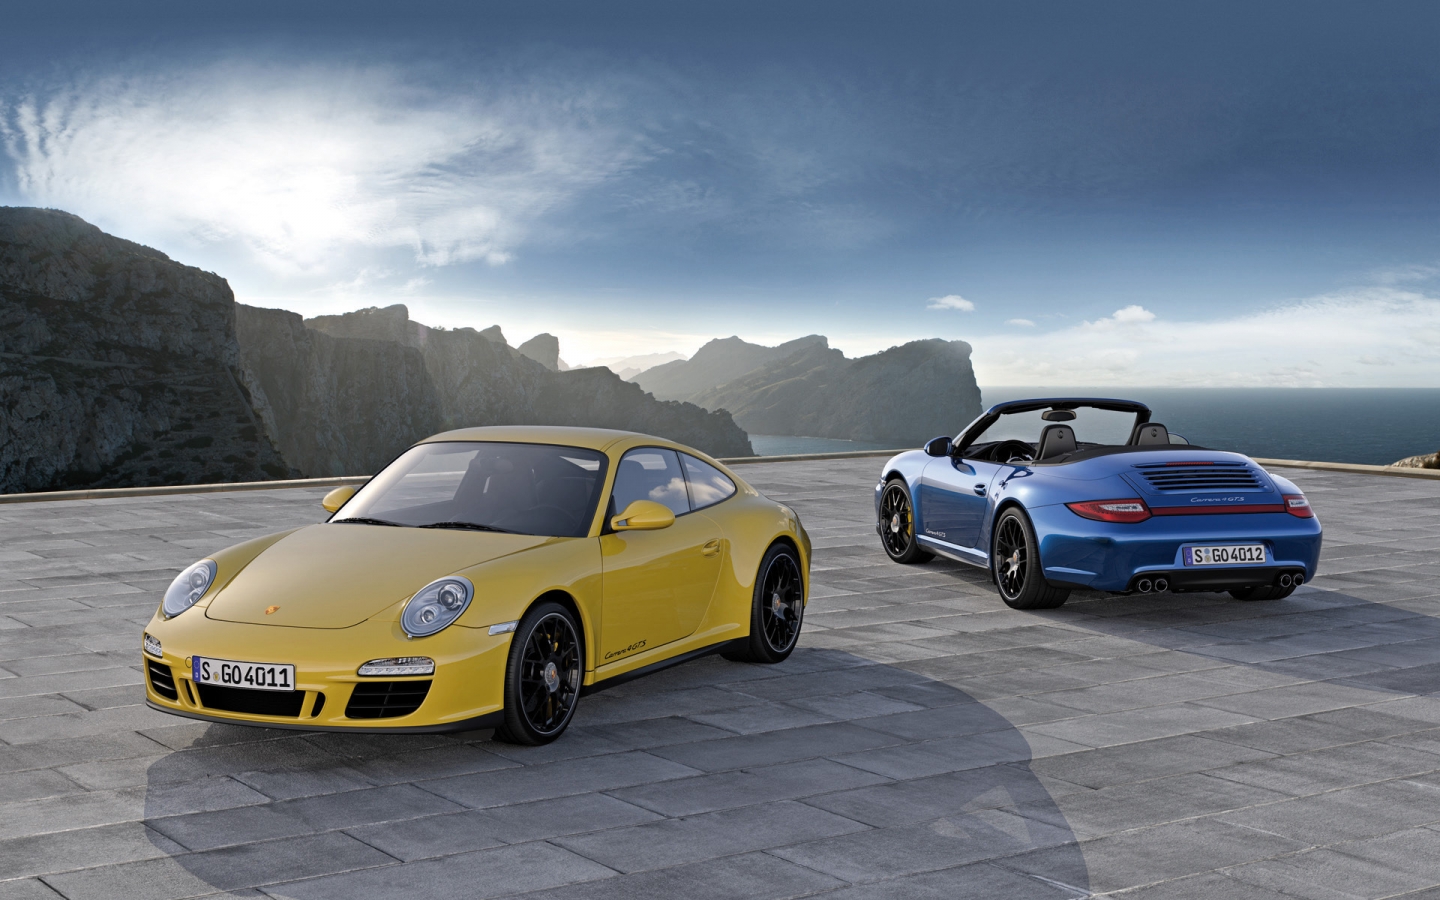 Porsche 911 Carrera 4 GTS Duo for 1440 x 900 widescreen resolution